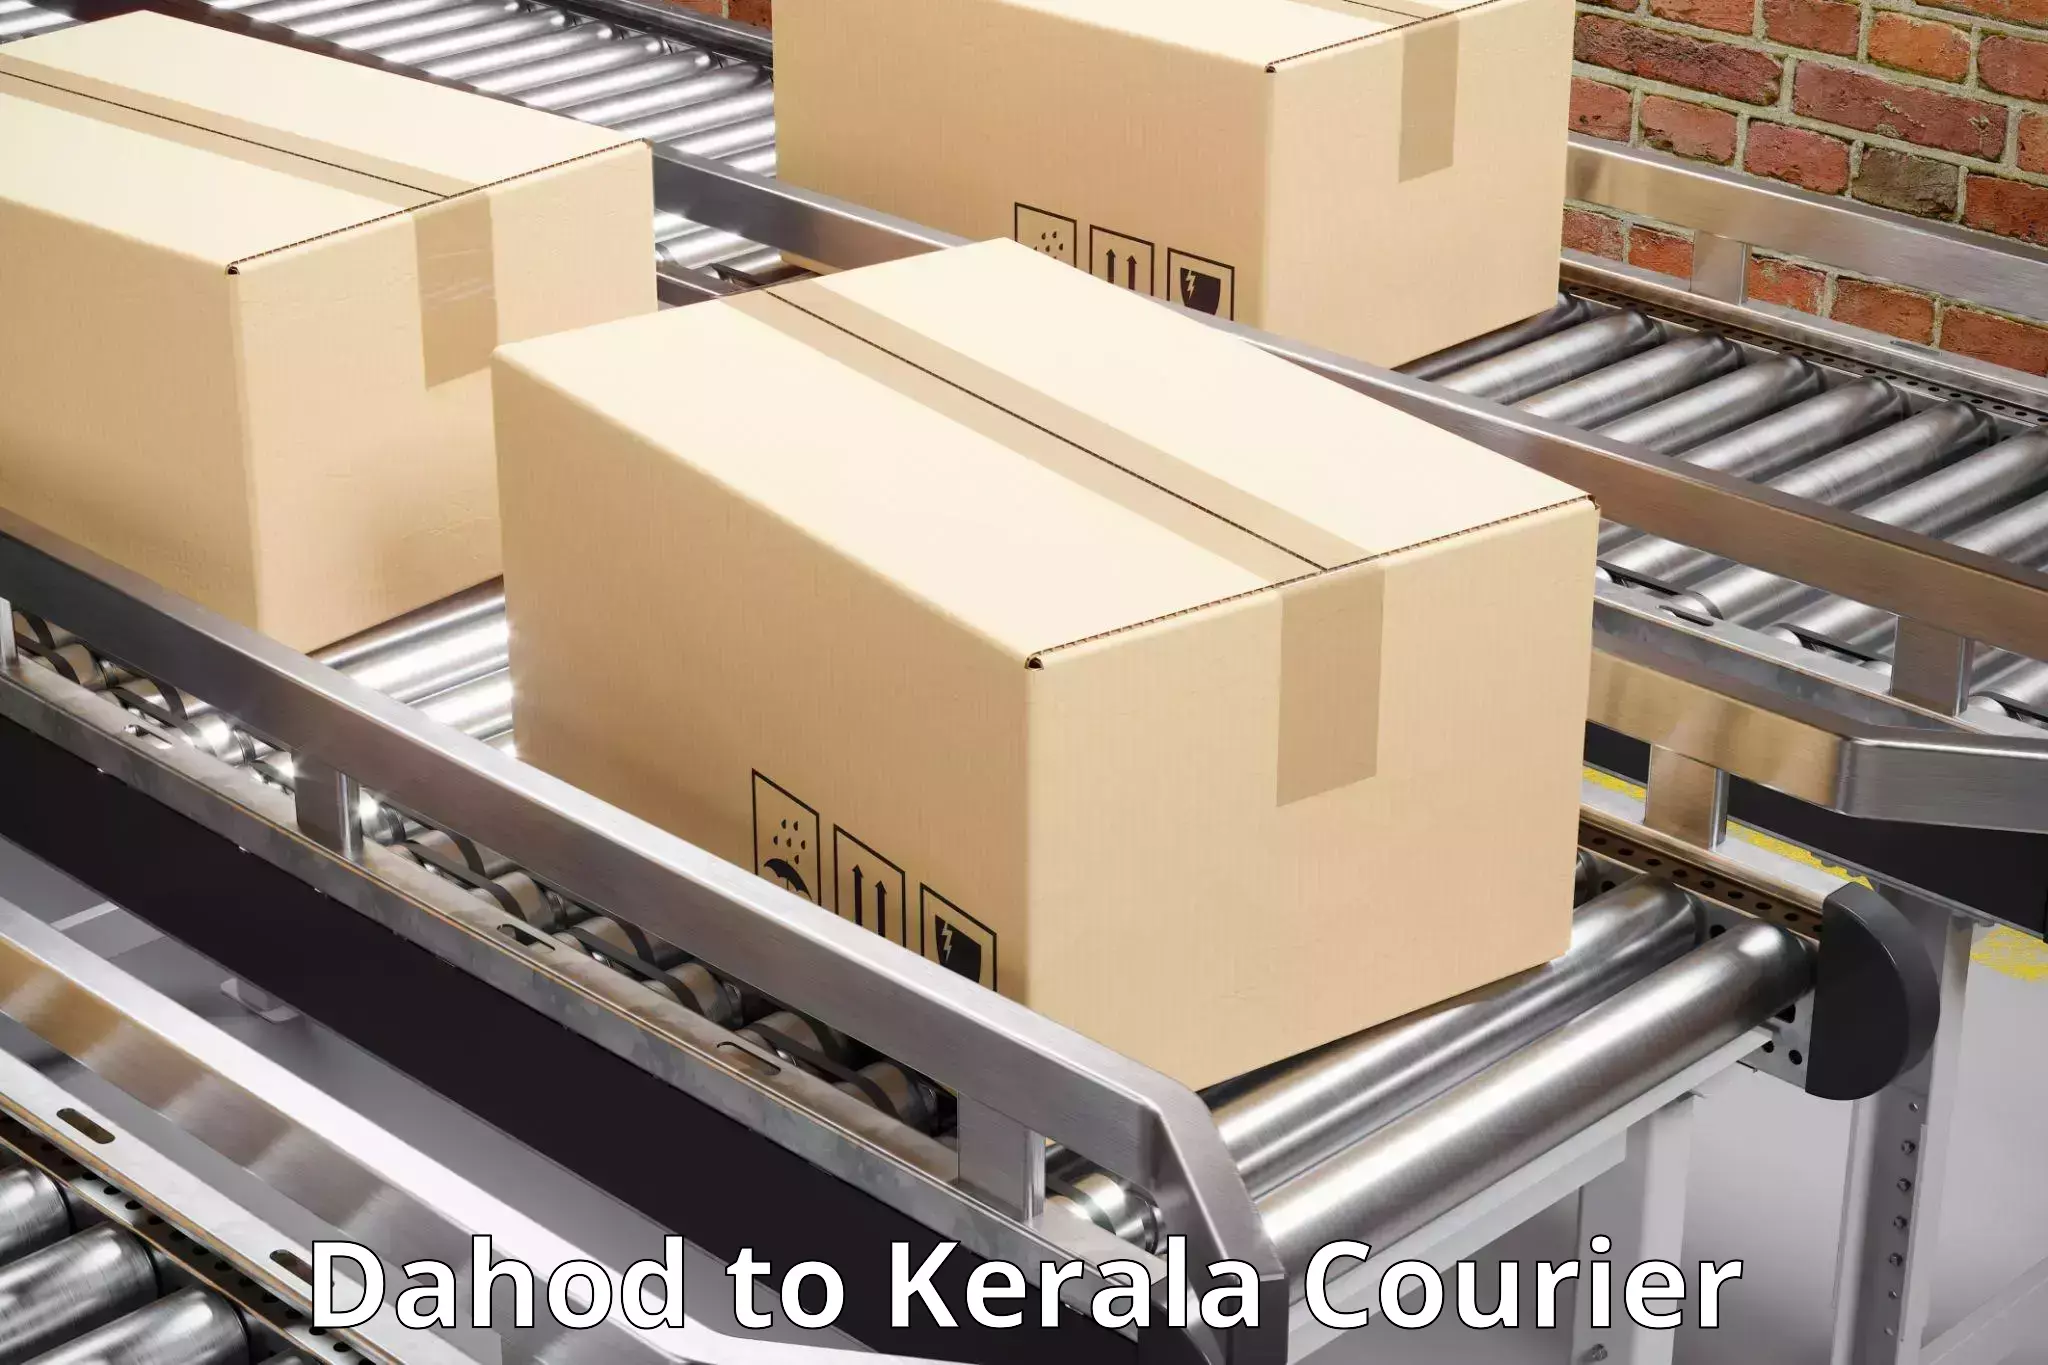 Seamless shipping experience Dahod to Cochin Port Kochi